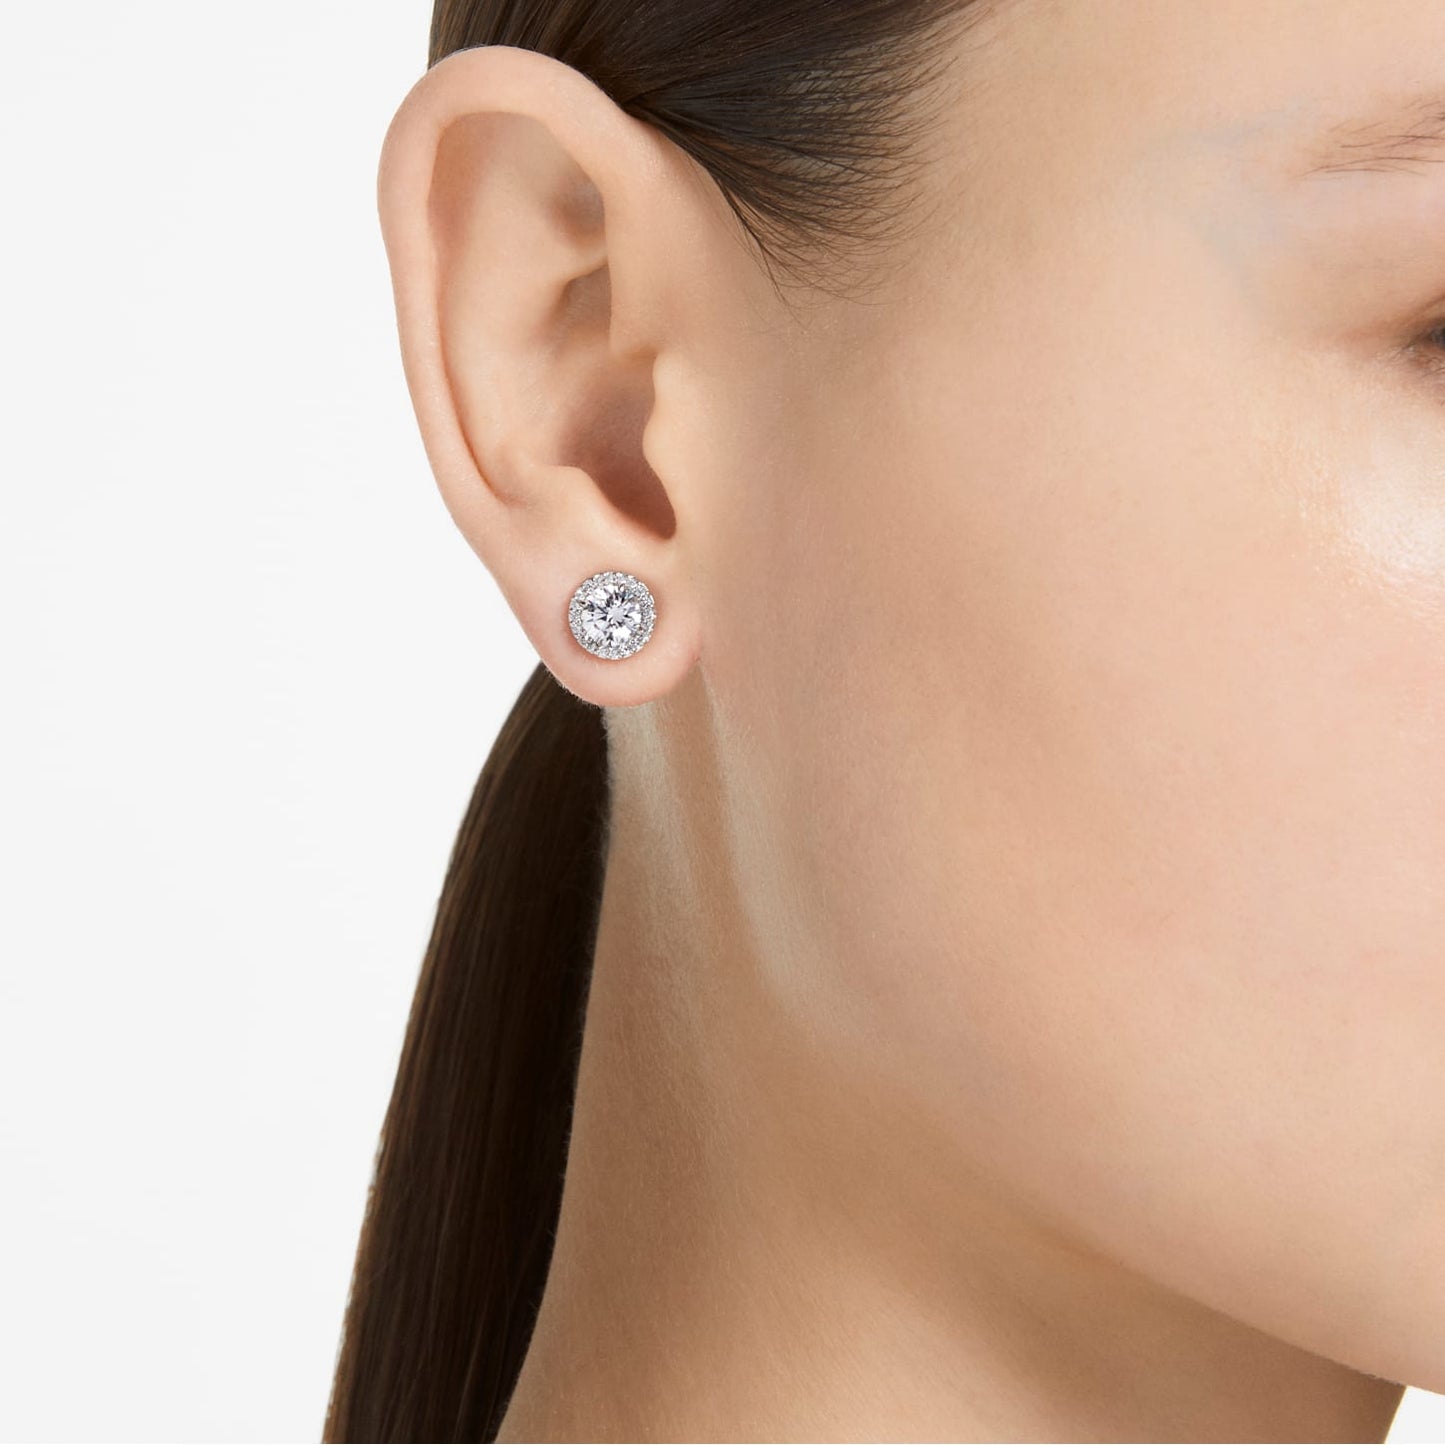 Constella - White Silver - Pavé - Stud earrings - Swarovski